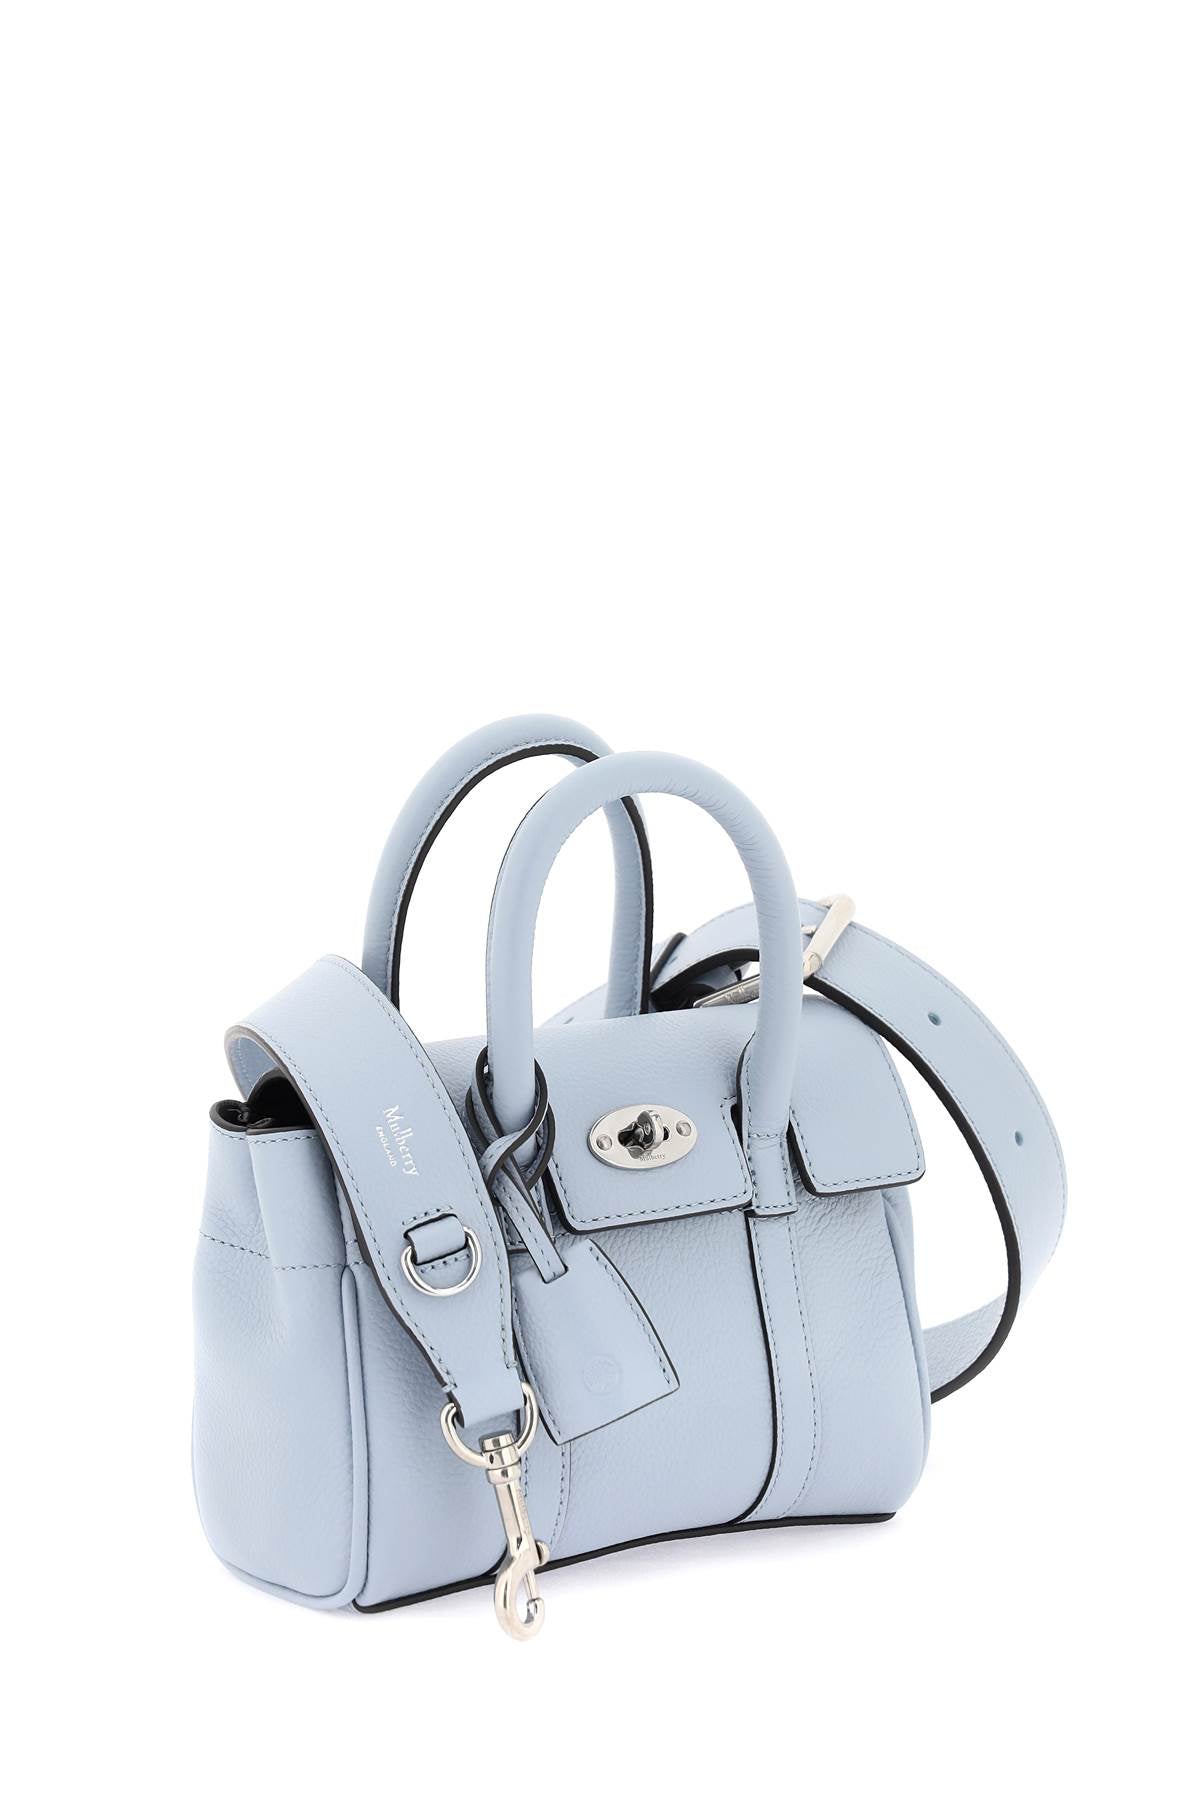 Shop Mulberry Light Blue Leather Bayswater Mini Handbag For Women